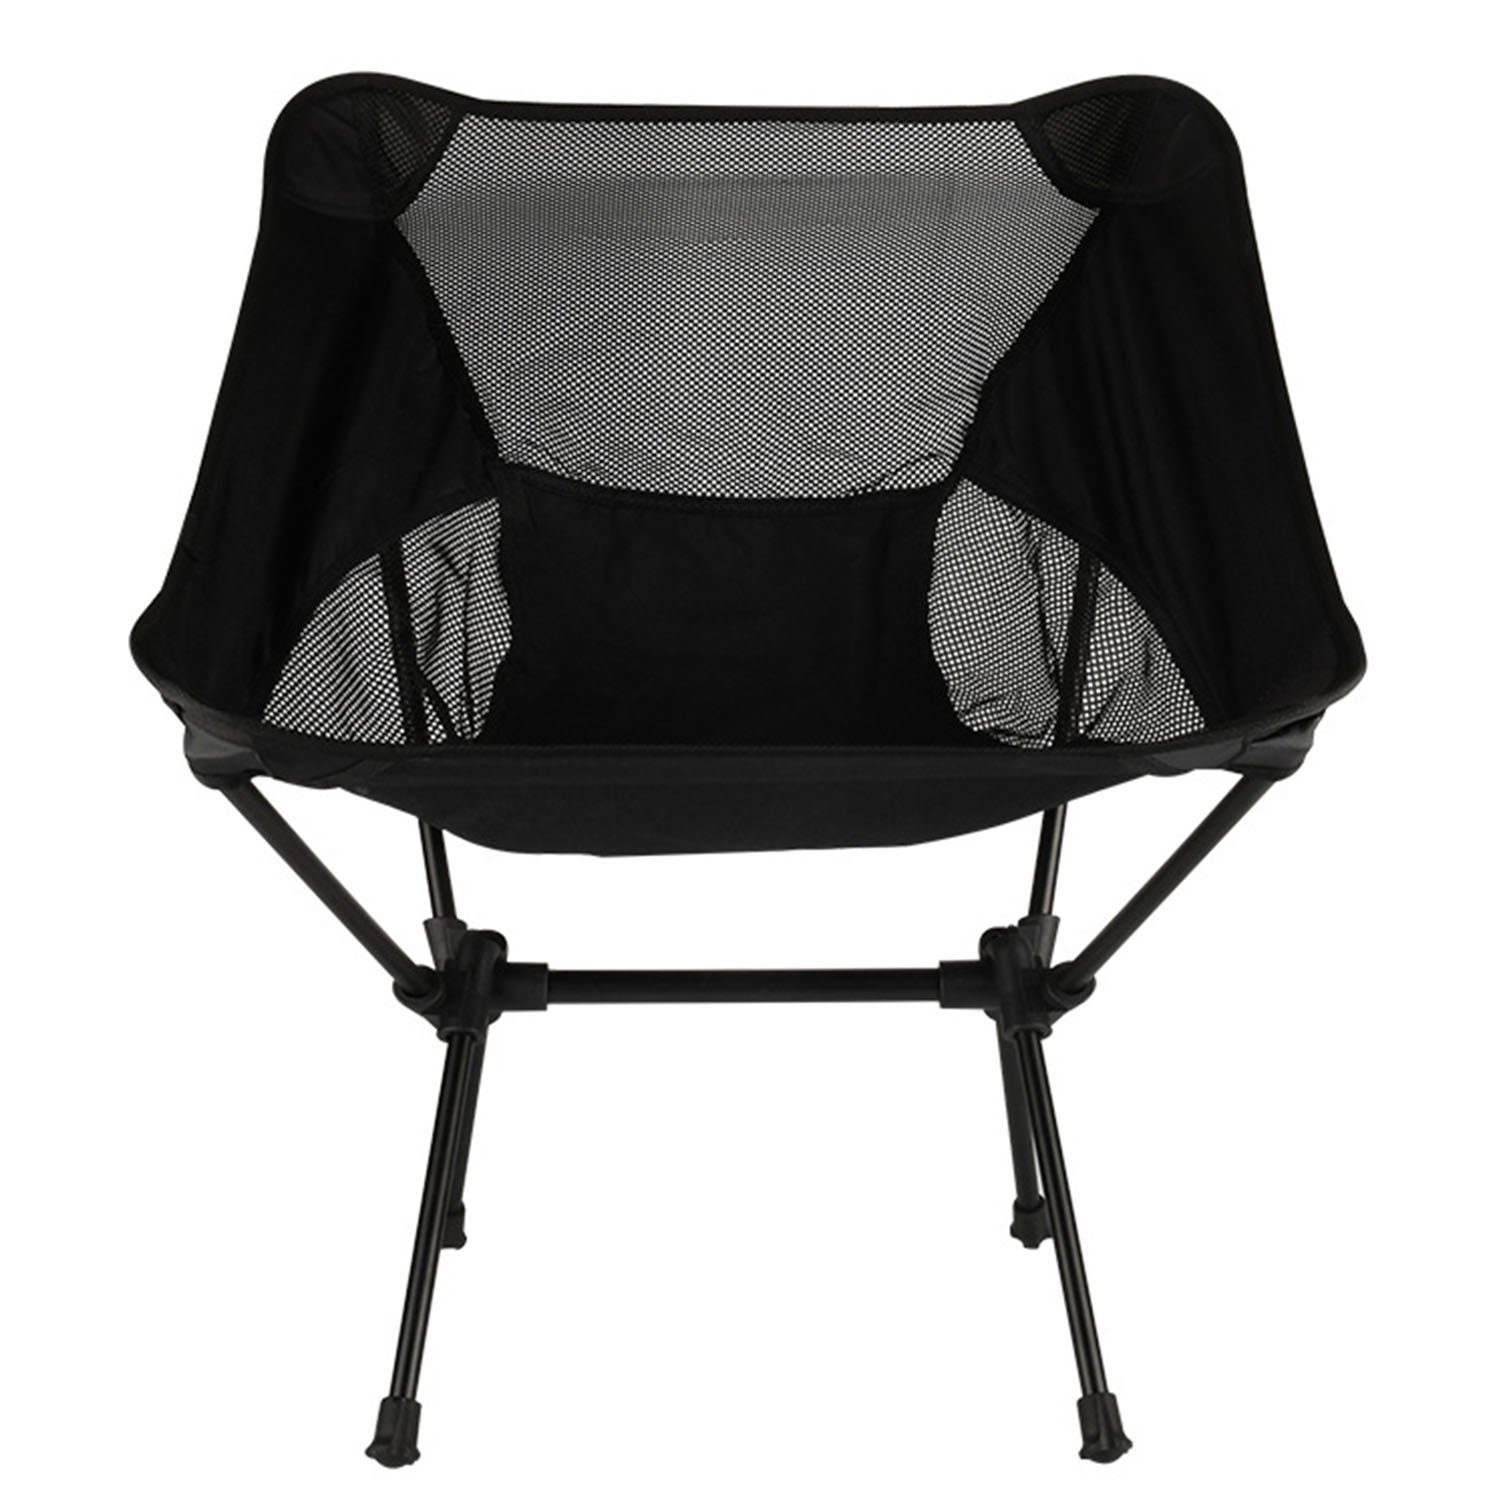 MAGICSHE Klappstuhl Camping Stuhl, ultra leichter Stuhl im Freien, Reise Stuhl, Faltbar, Tragfähigkeit 120 kg, Picknick, Outdoor schwarz